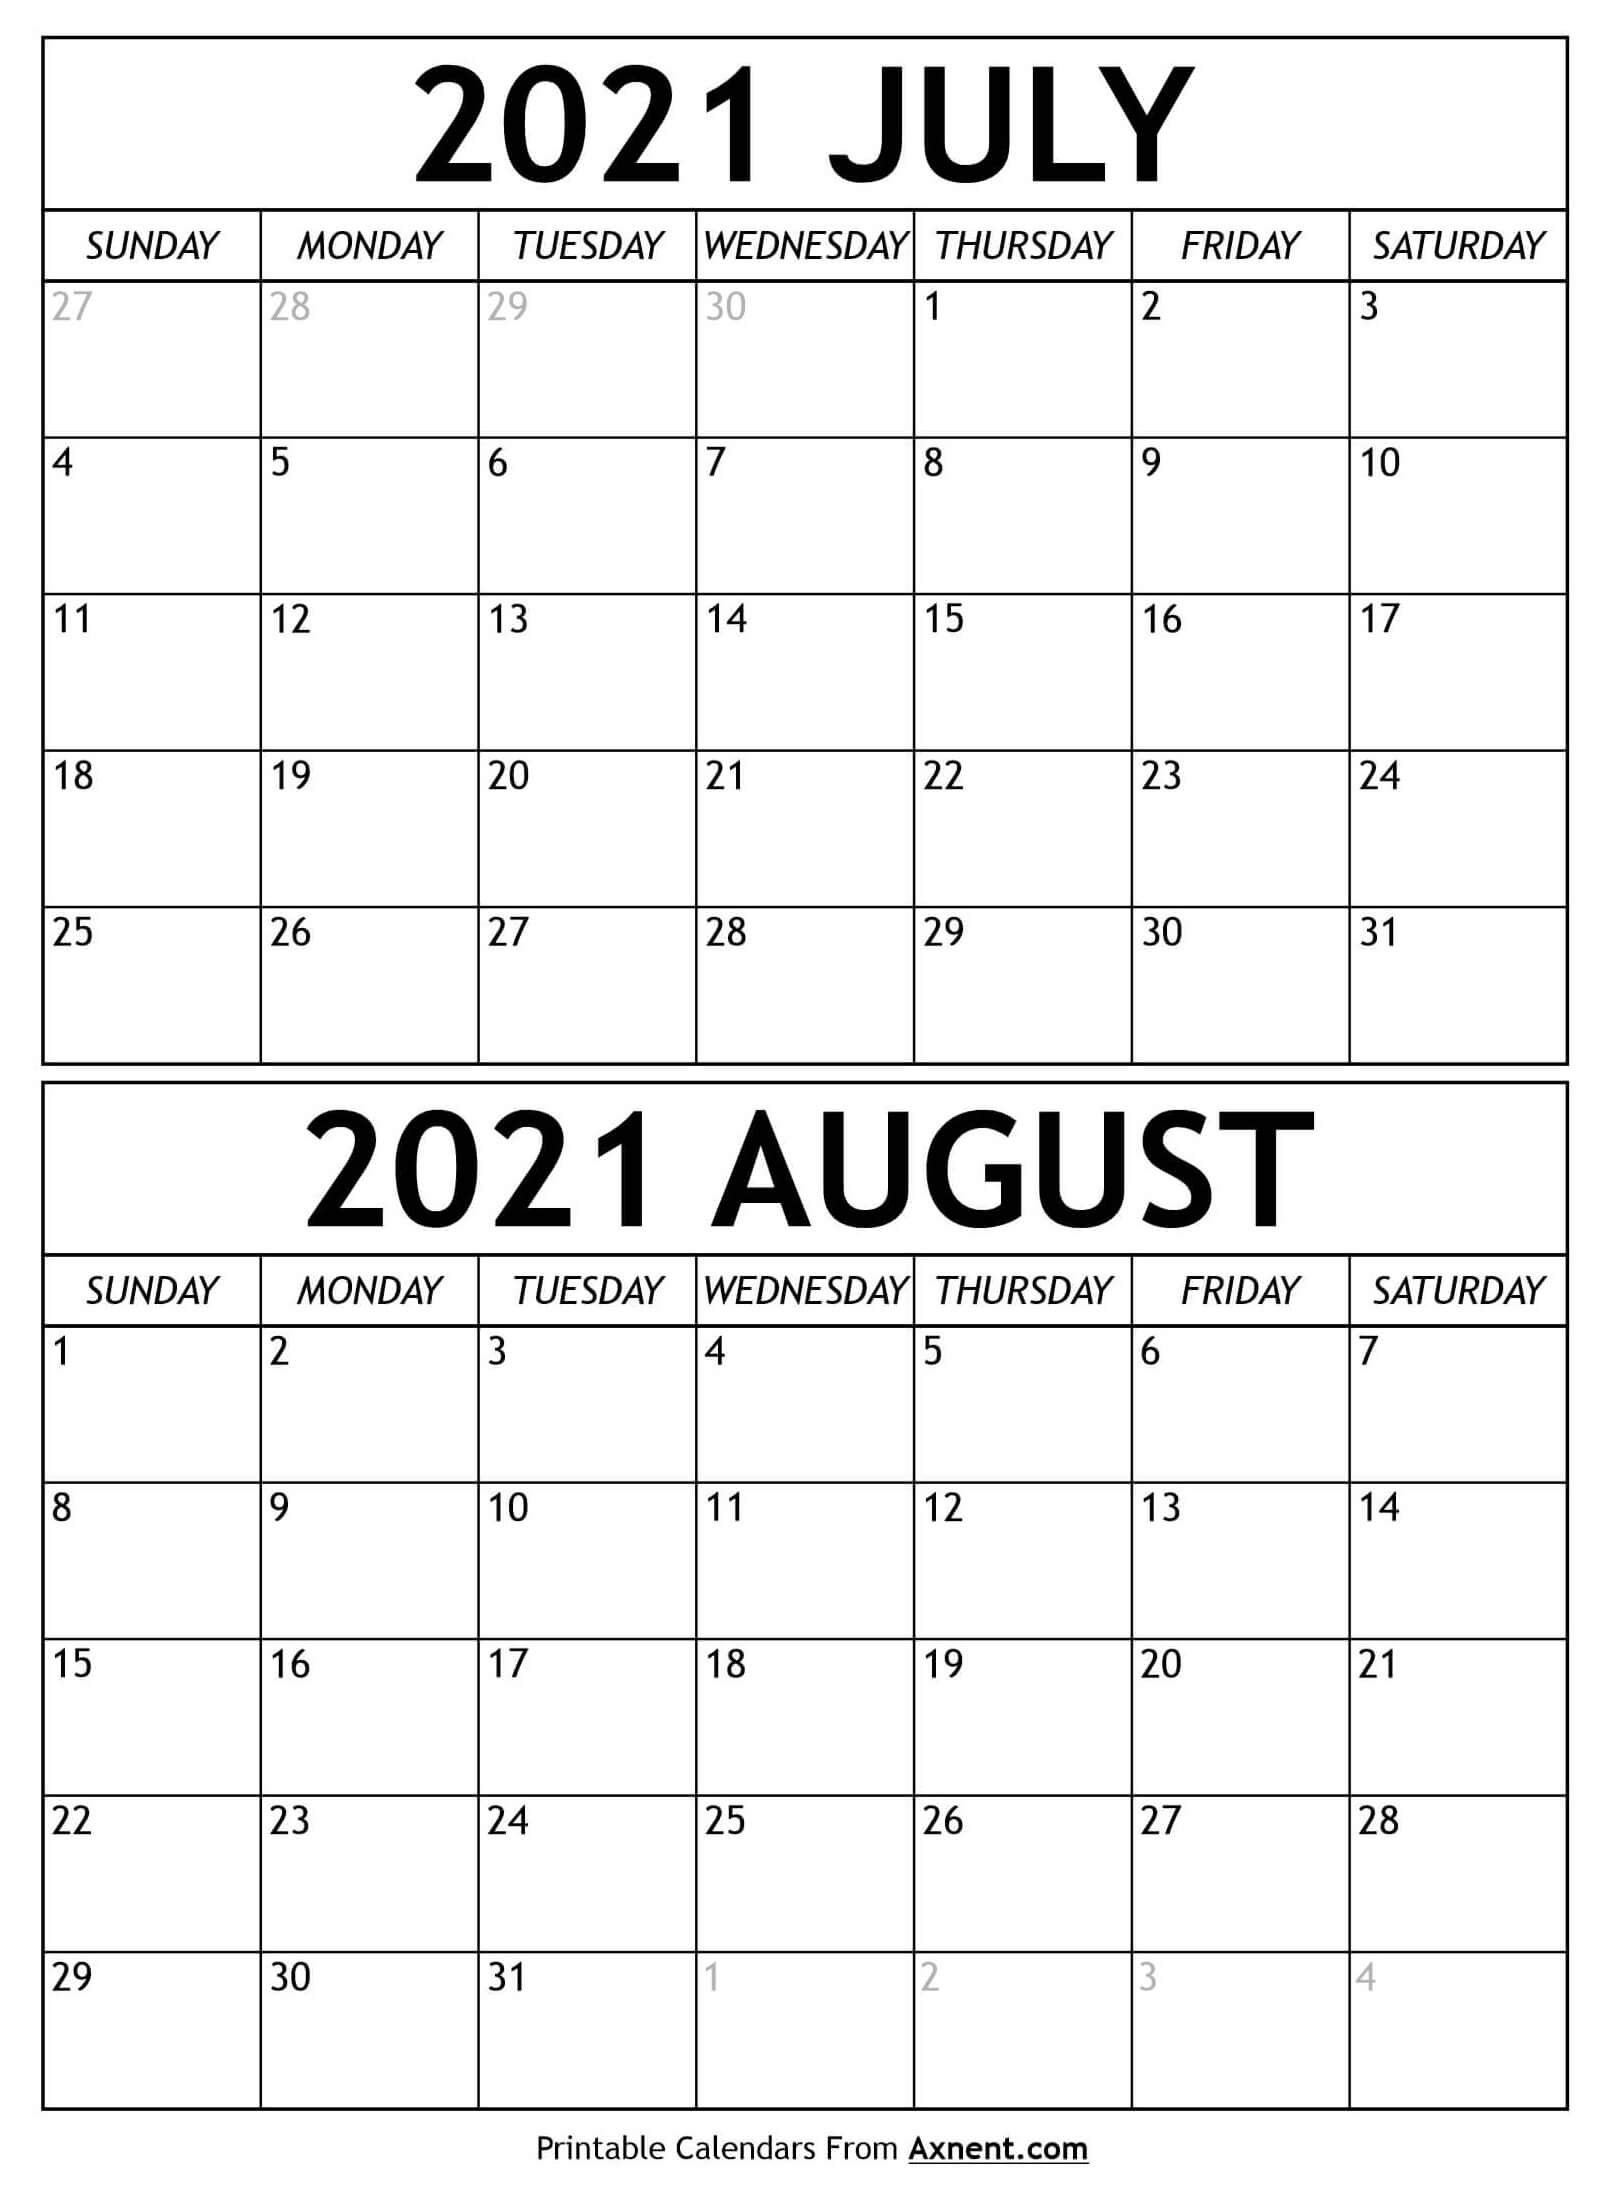 July August 2021 Calendar Templates - Time Management Tools July August 2021 Calendar Templates Calendar Ortodox August 2021 Patriarhie